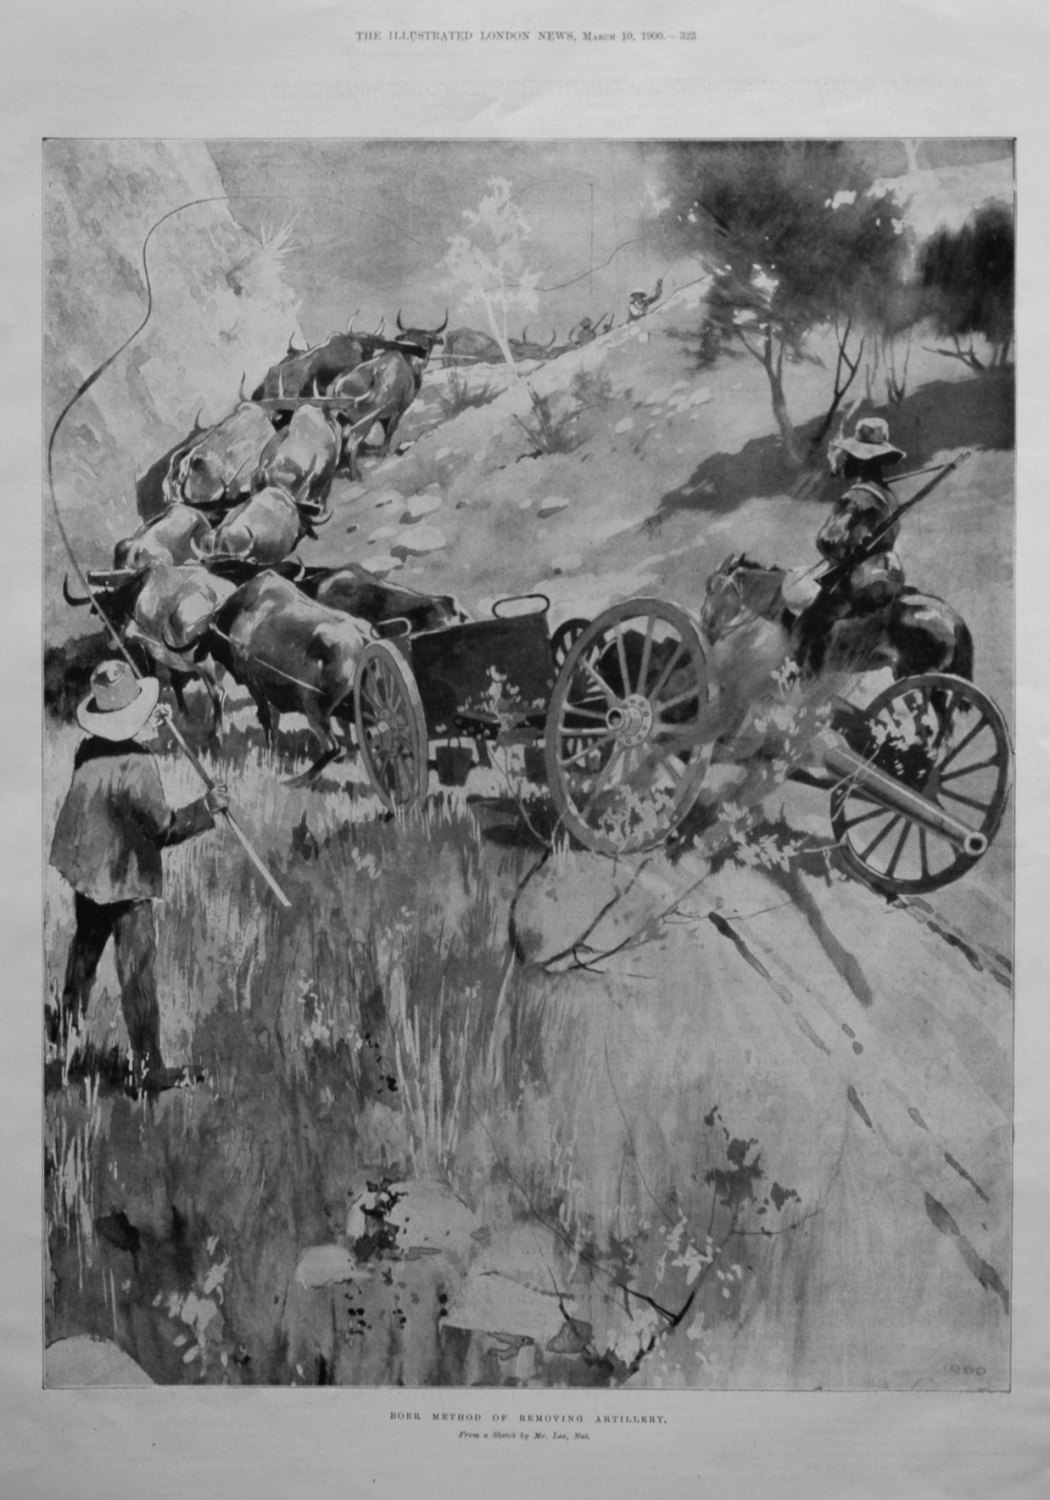 Boer Method of Removing Artillery. 1900